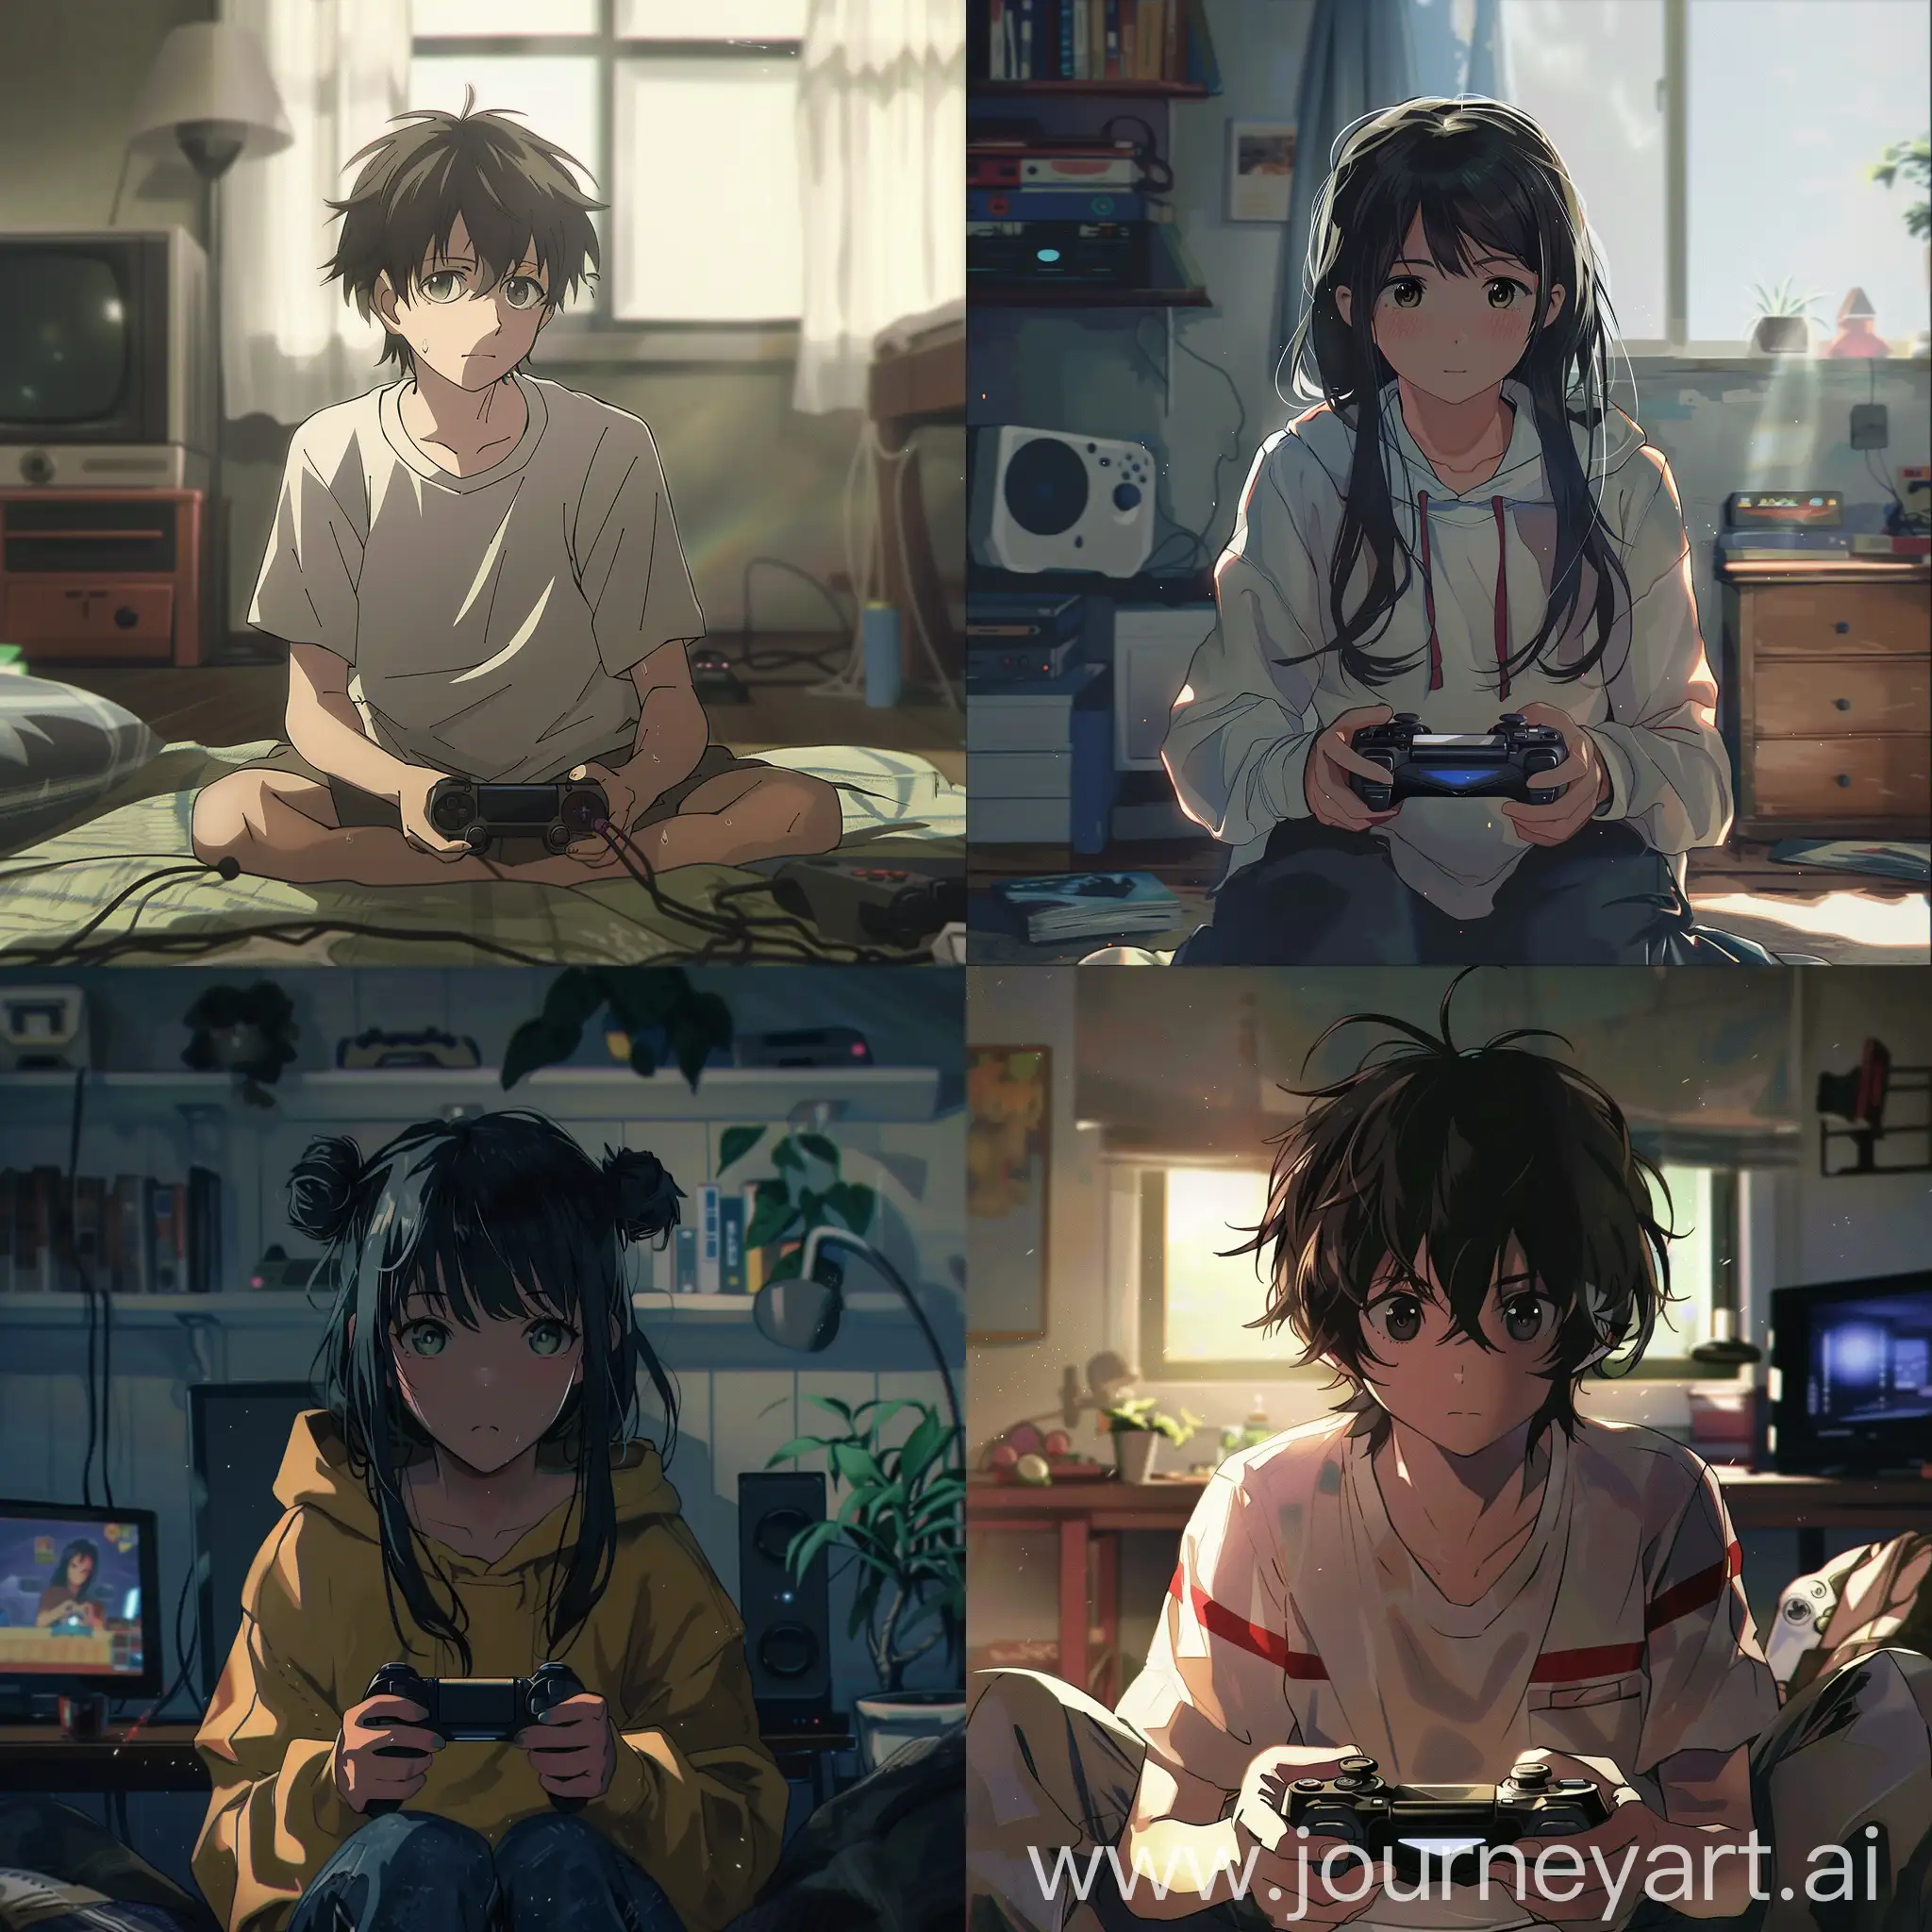 anime student playing videogames